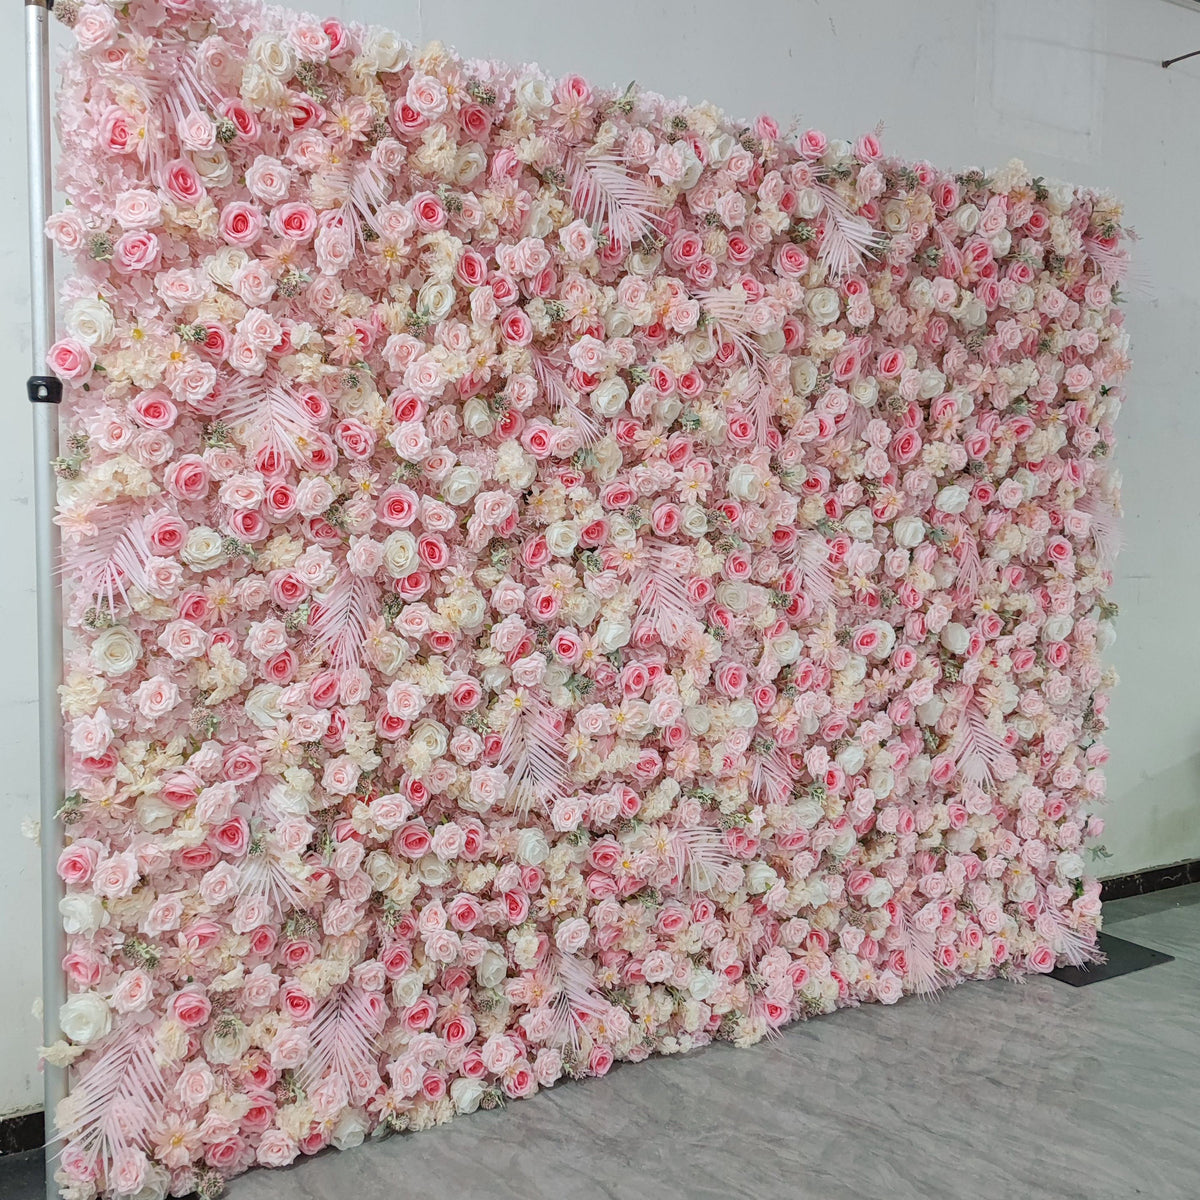 3D Artificial Flower Wall Arrangement Wedding Party Birthday Backdrop Decor HQ3769